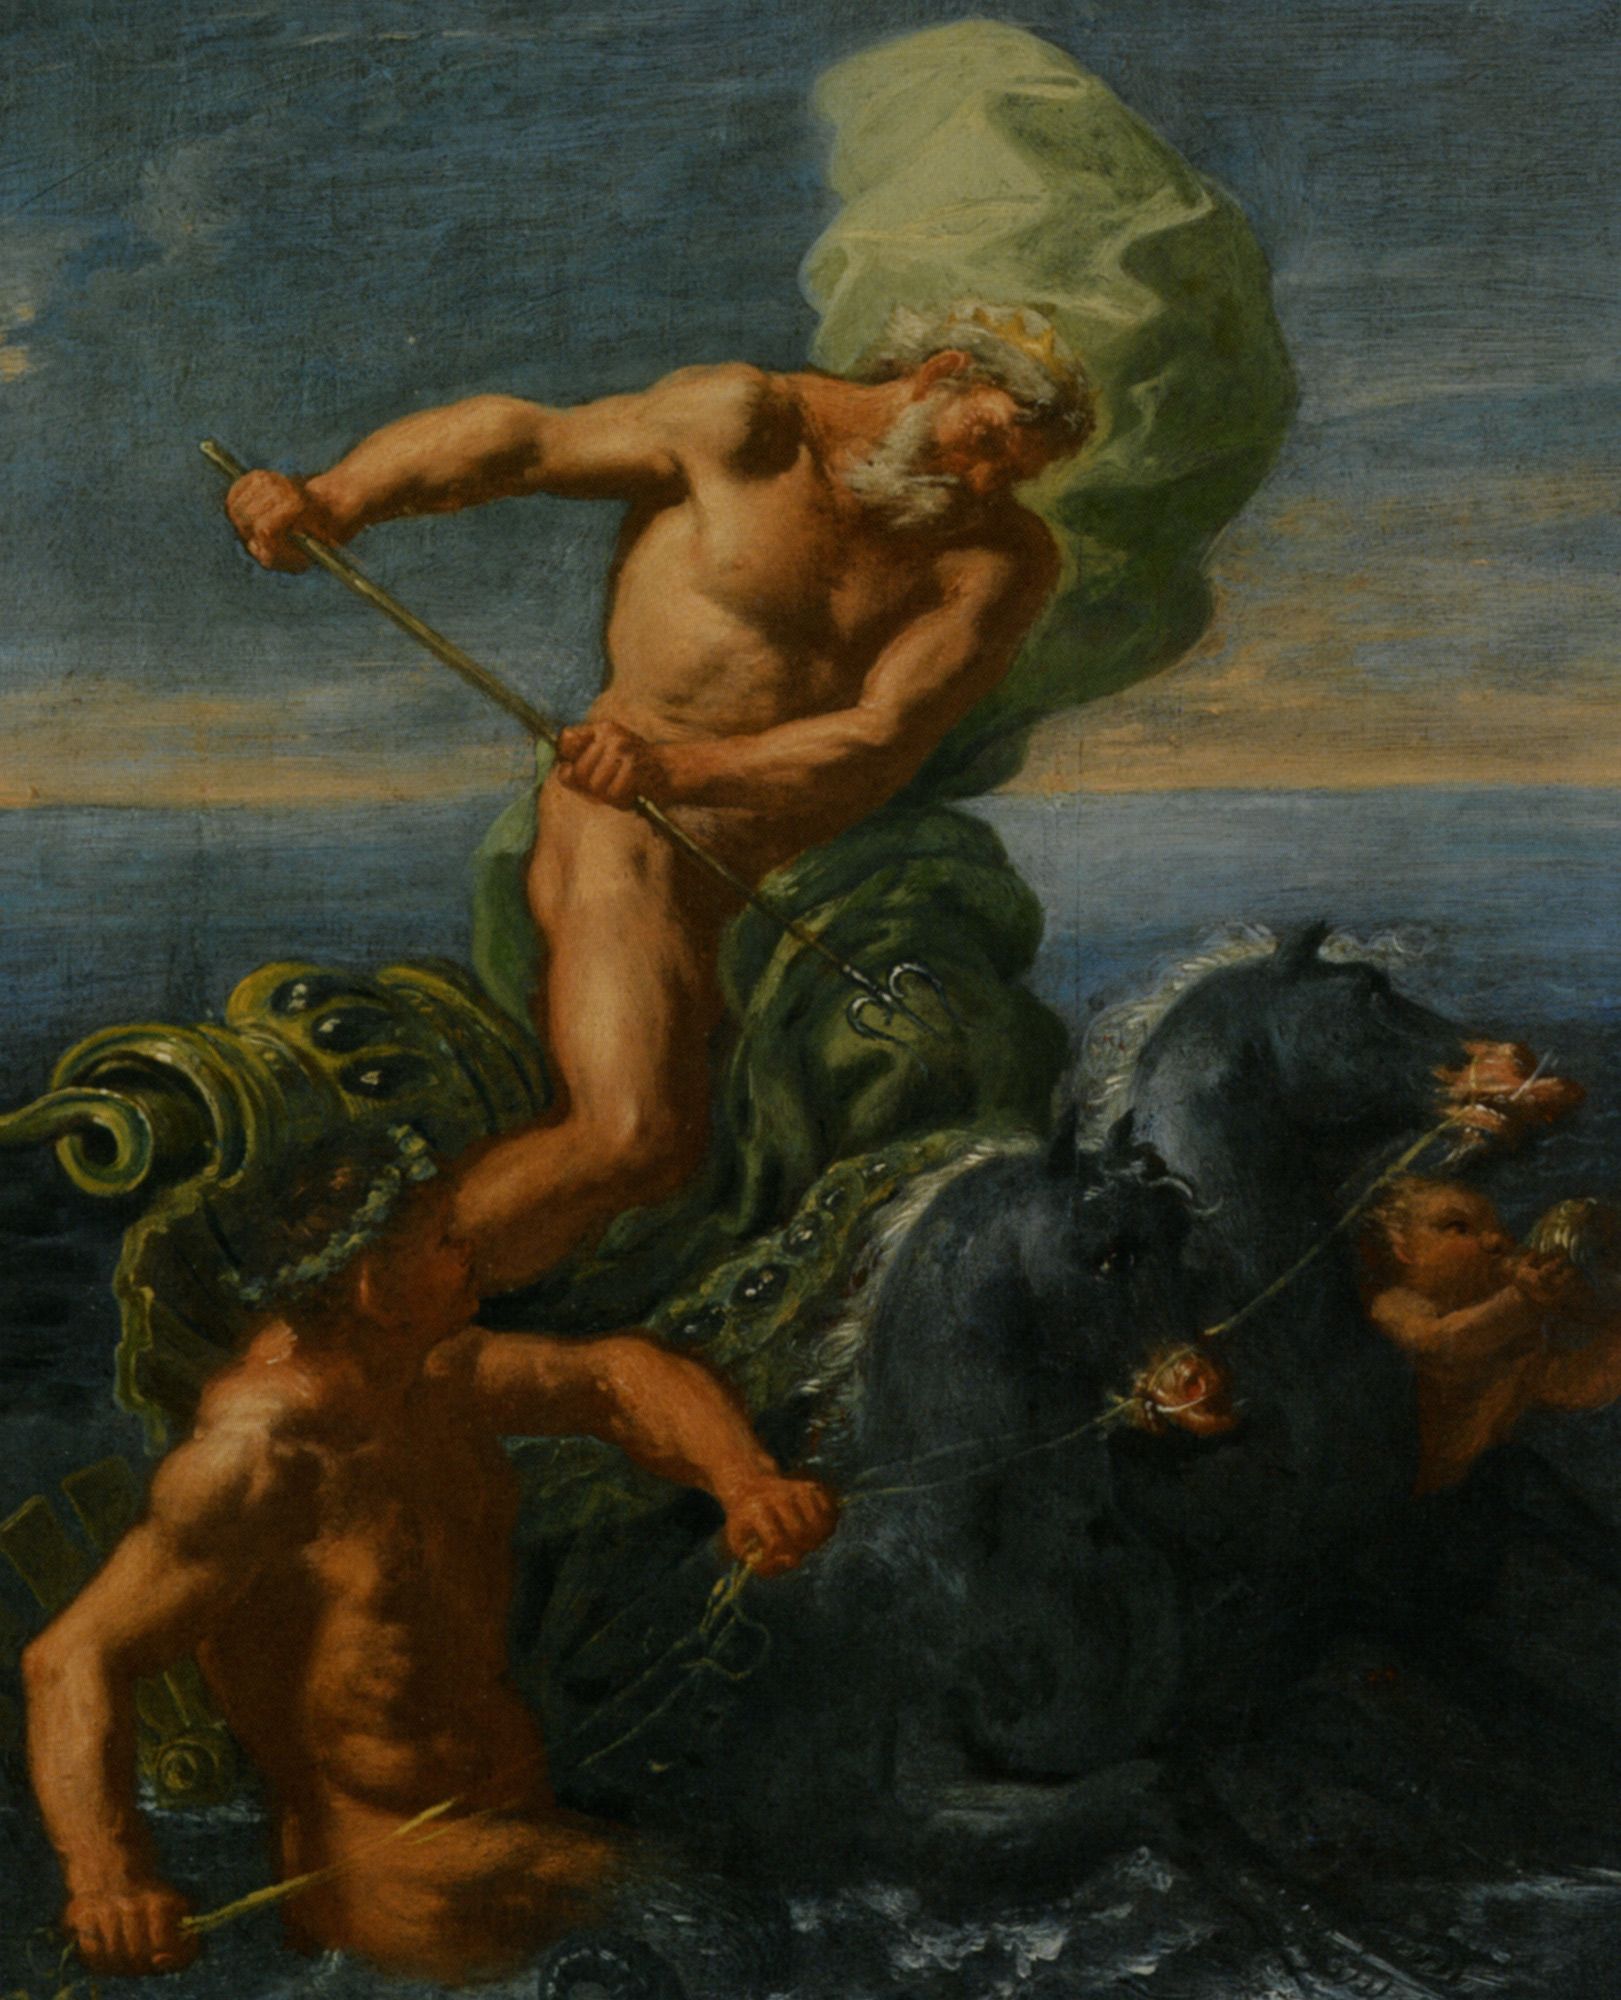 Neptune and his Chariot of Horses by Domenico Antonio Vaccaro